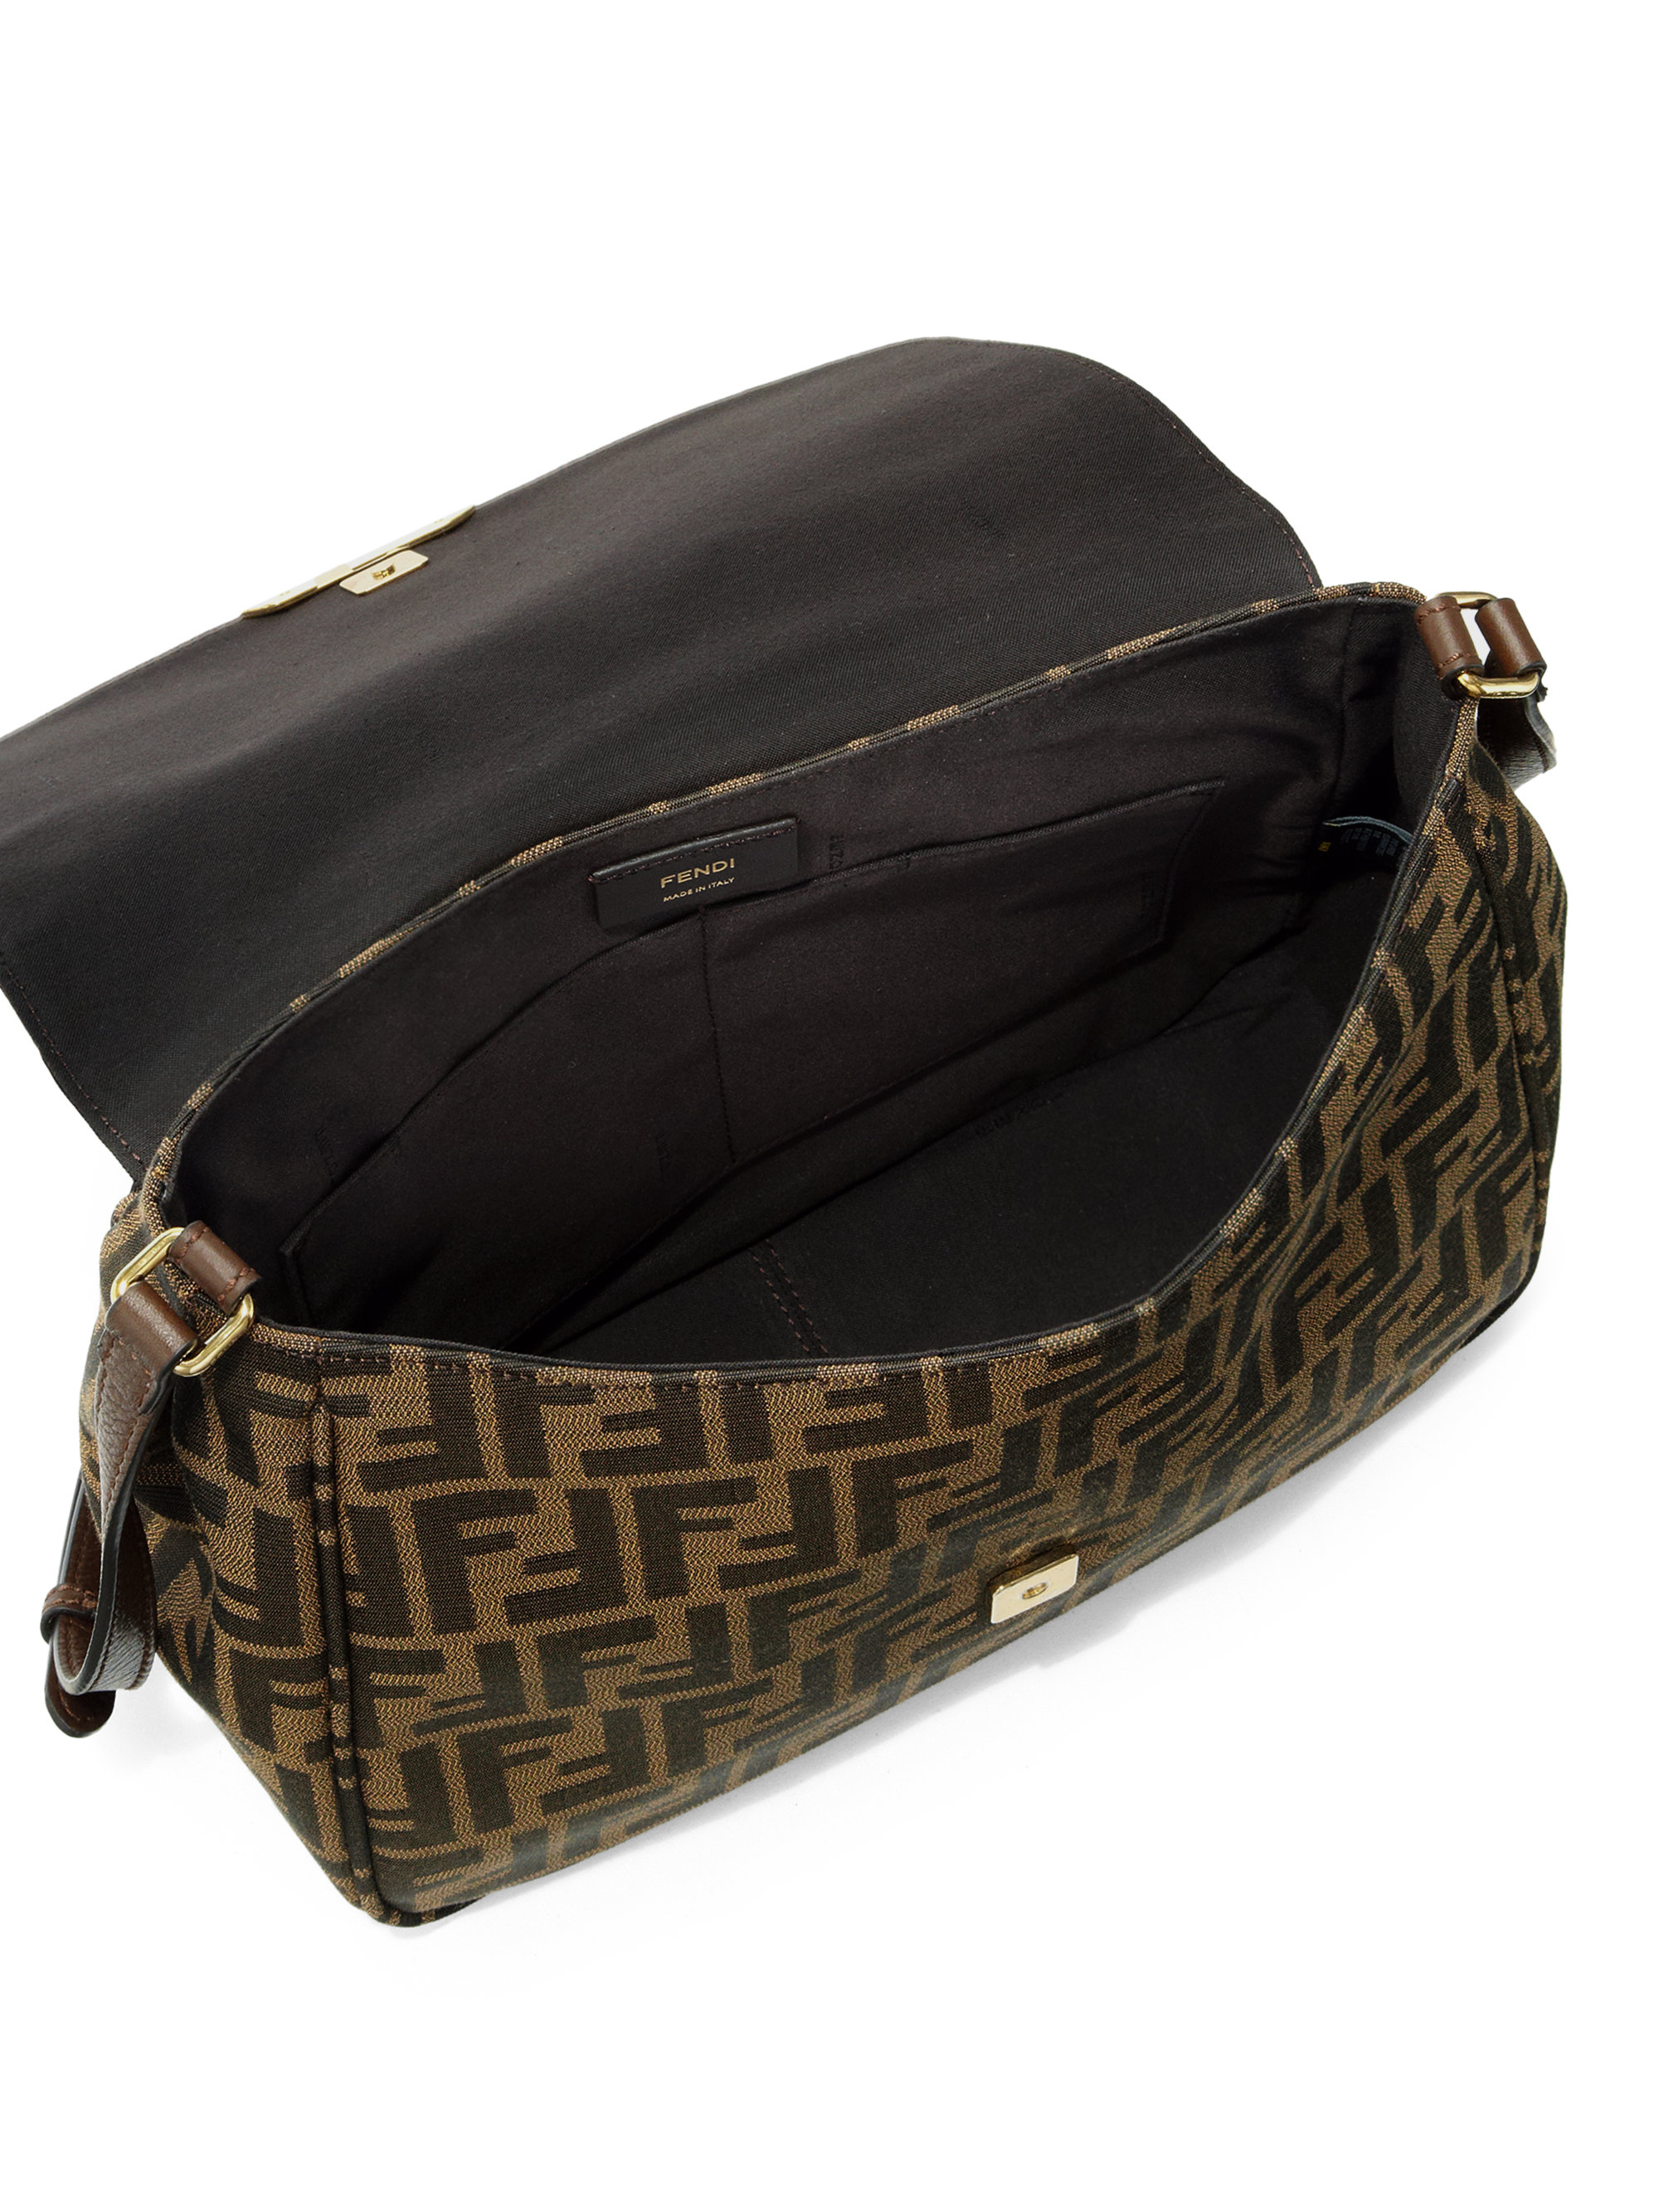 Fendi Zucca Canvas Shoulder Bag in Brown - Lyst